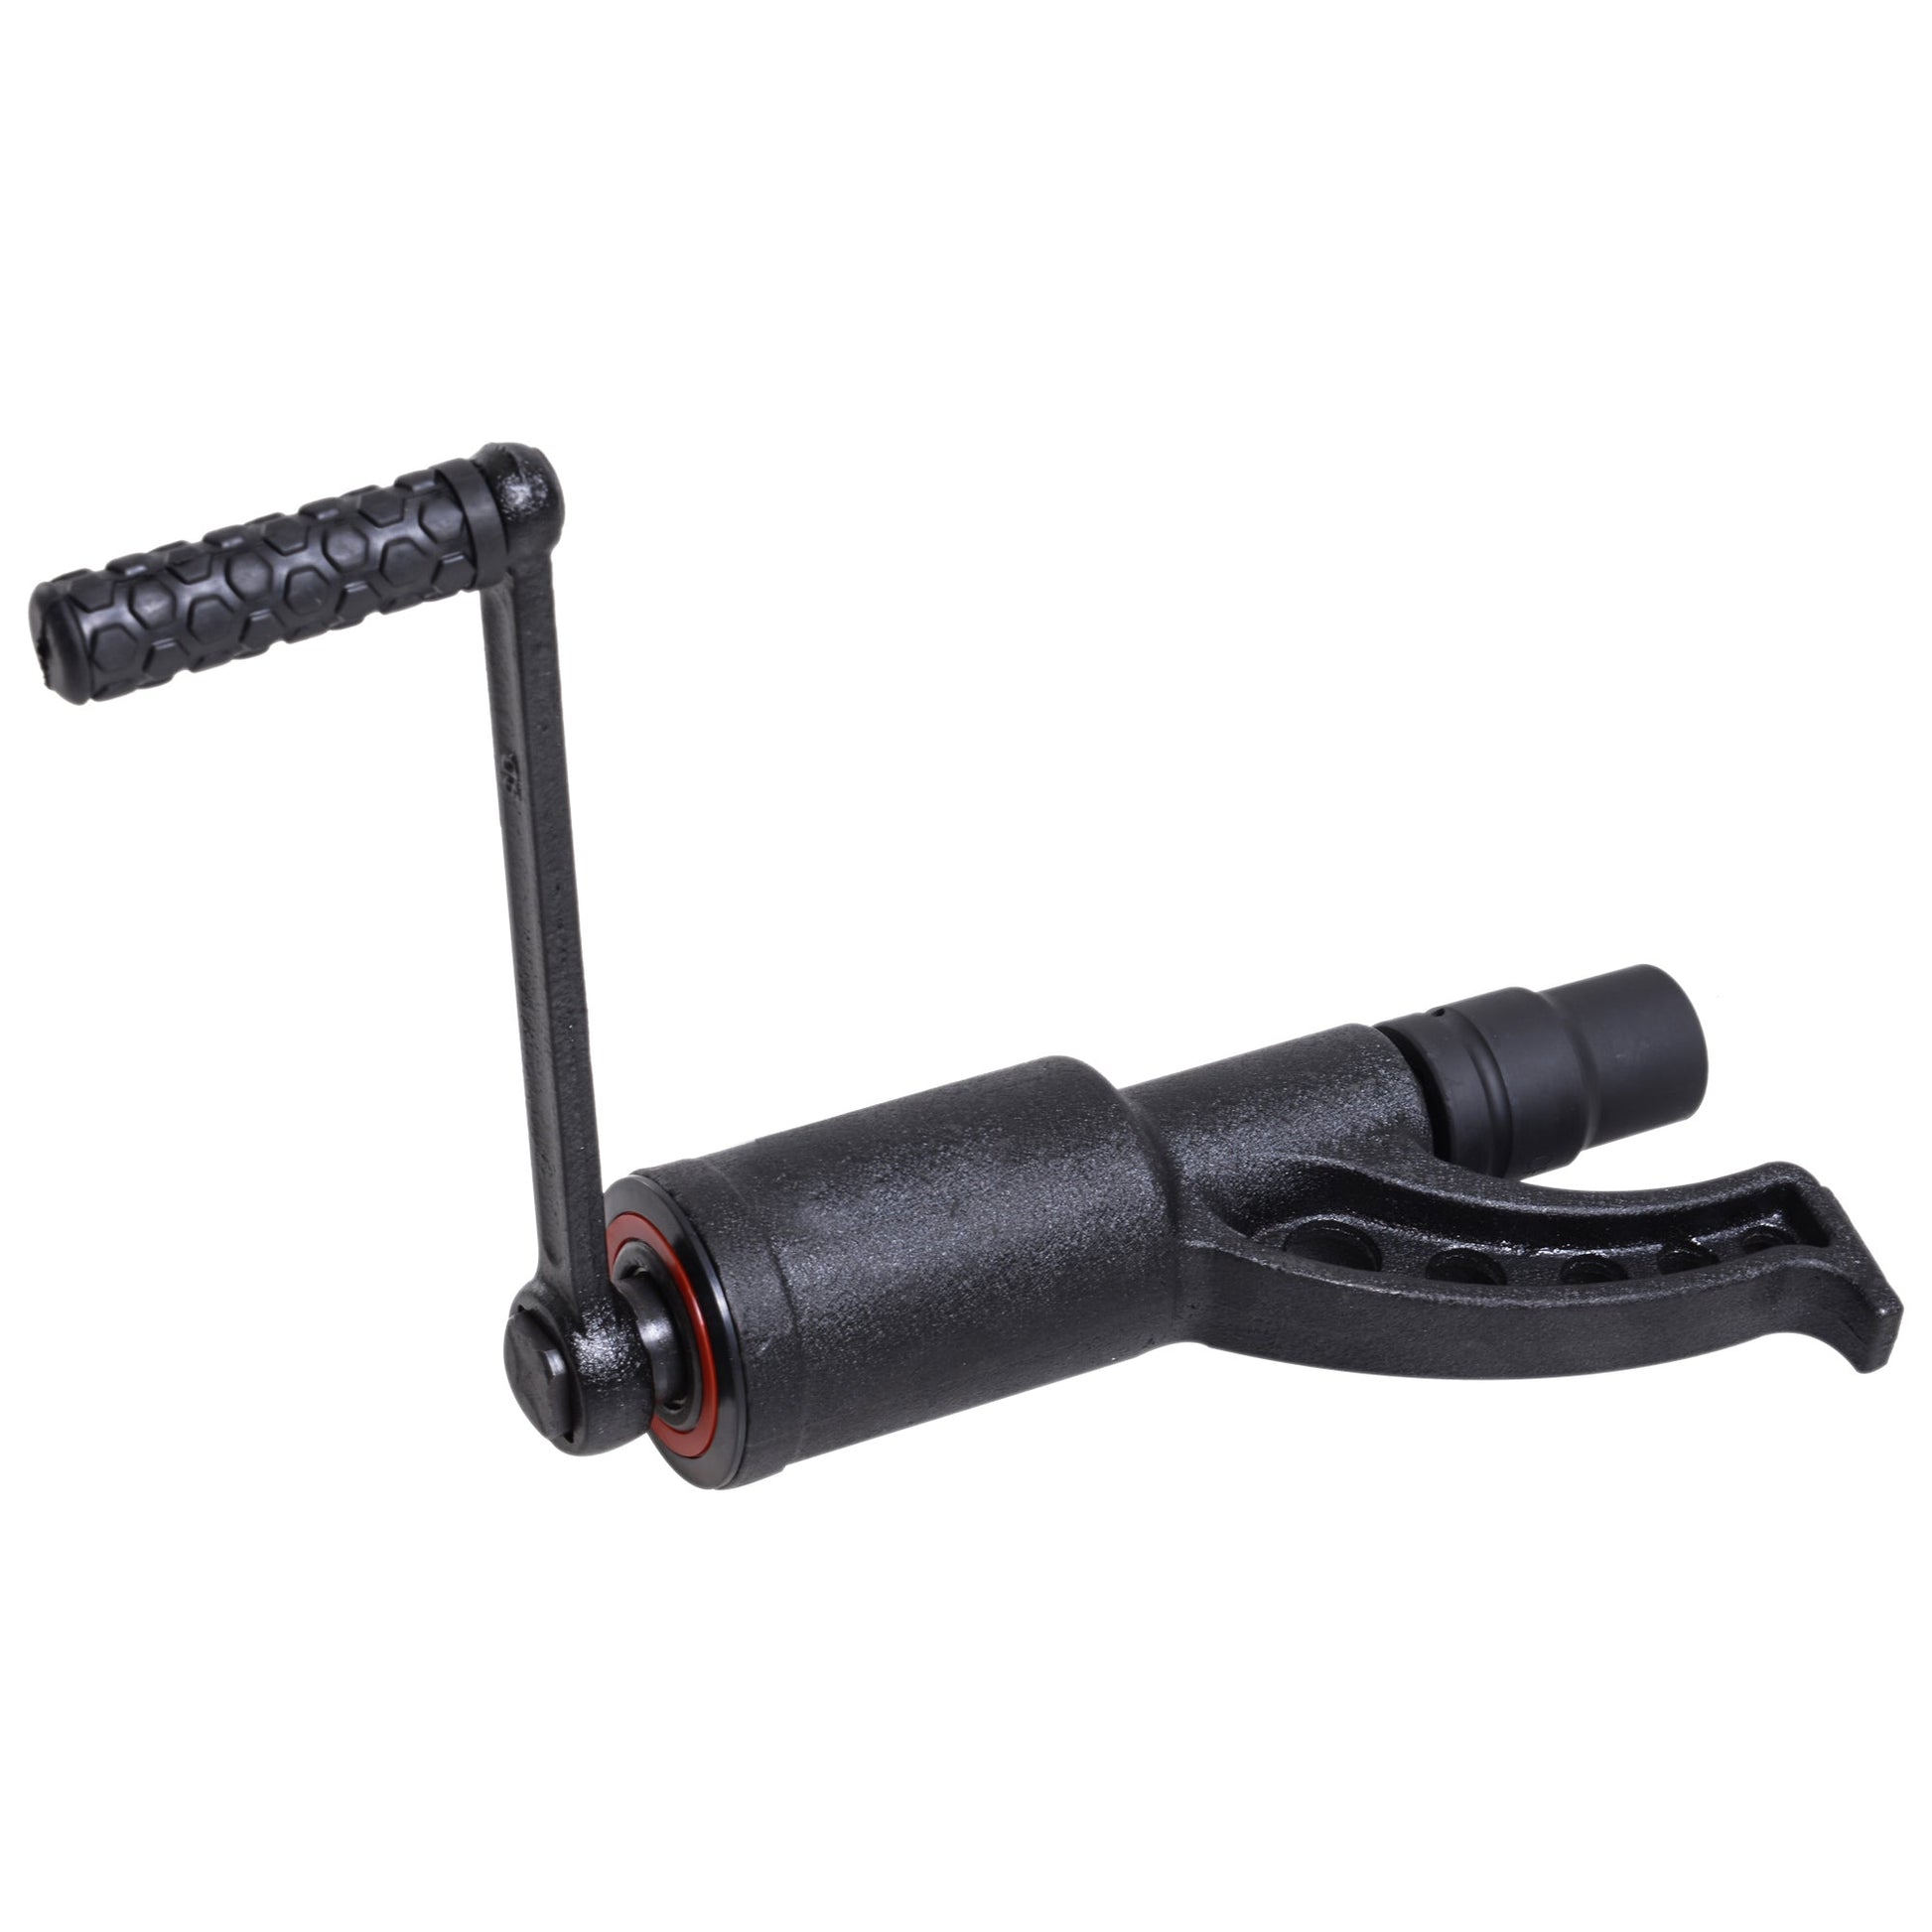 11pcs Heavy Duty Torque Multiplier Wrench Set Socket Lug Nut Remover 1:64 Labor Saving Kit at Gallery Canada